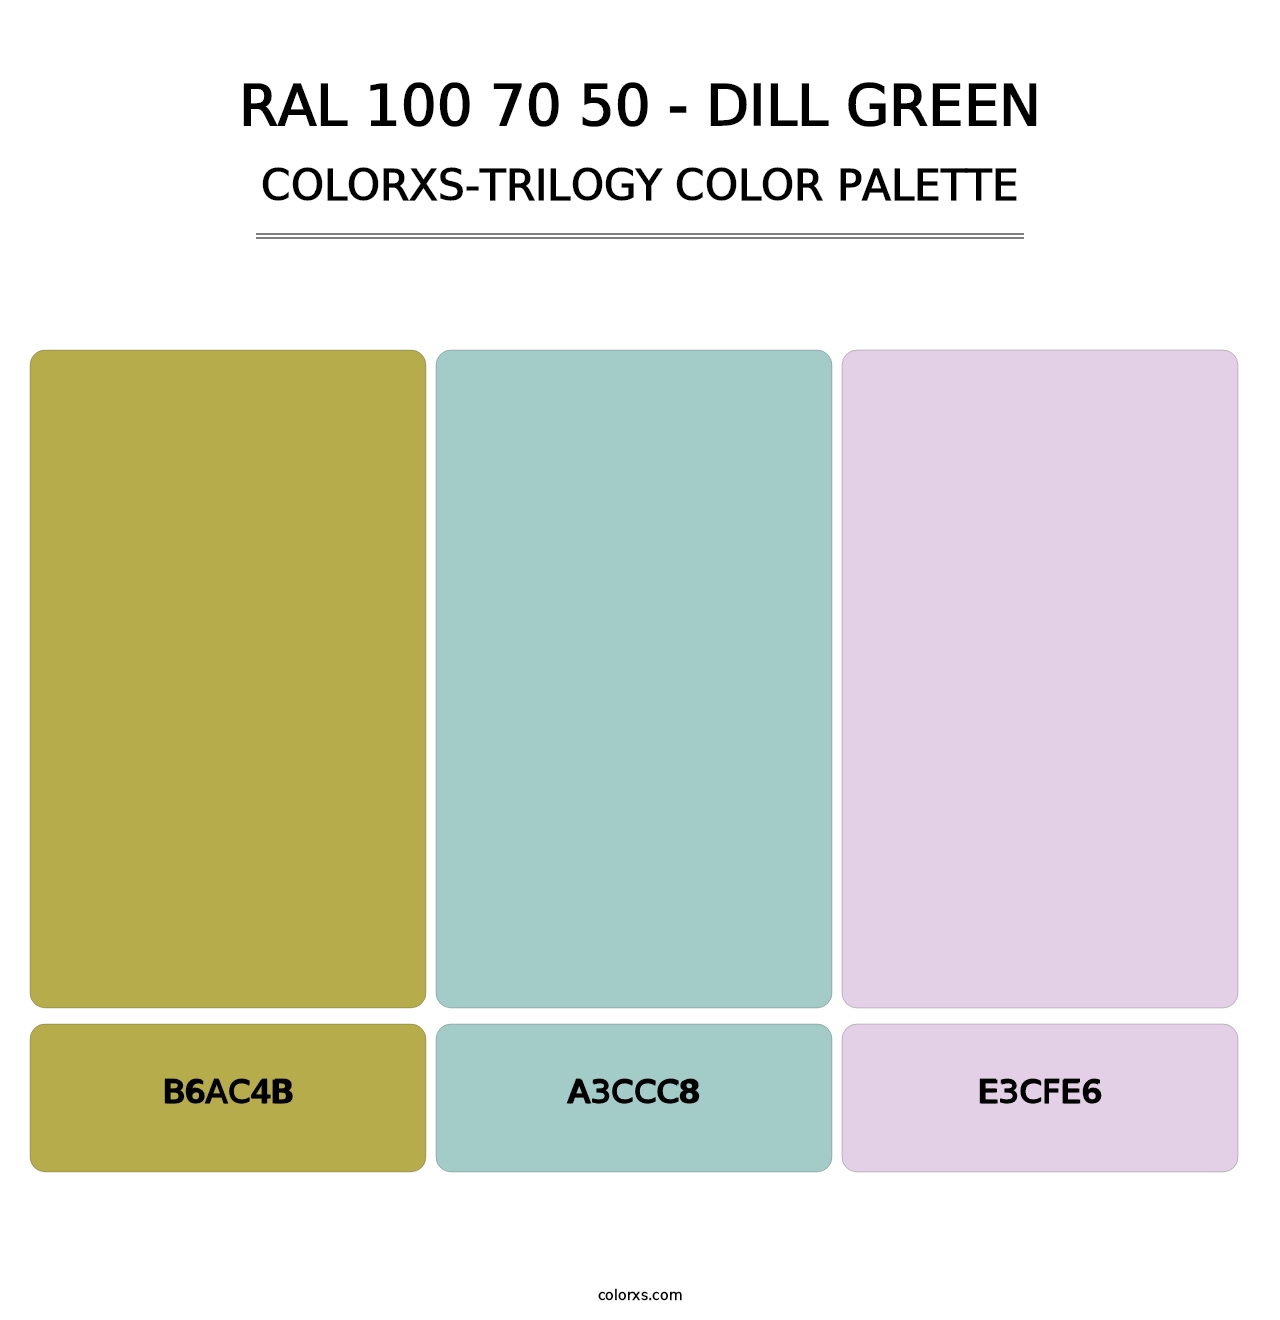 RAL 100 70 50 - Dill Green - Colorxs Trilogy Palette